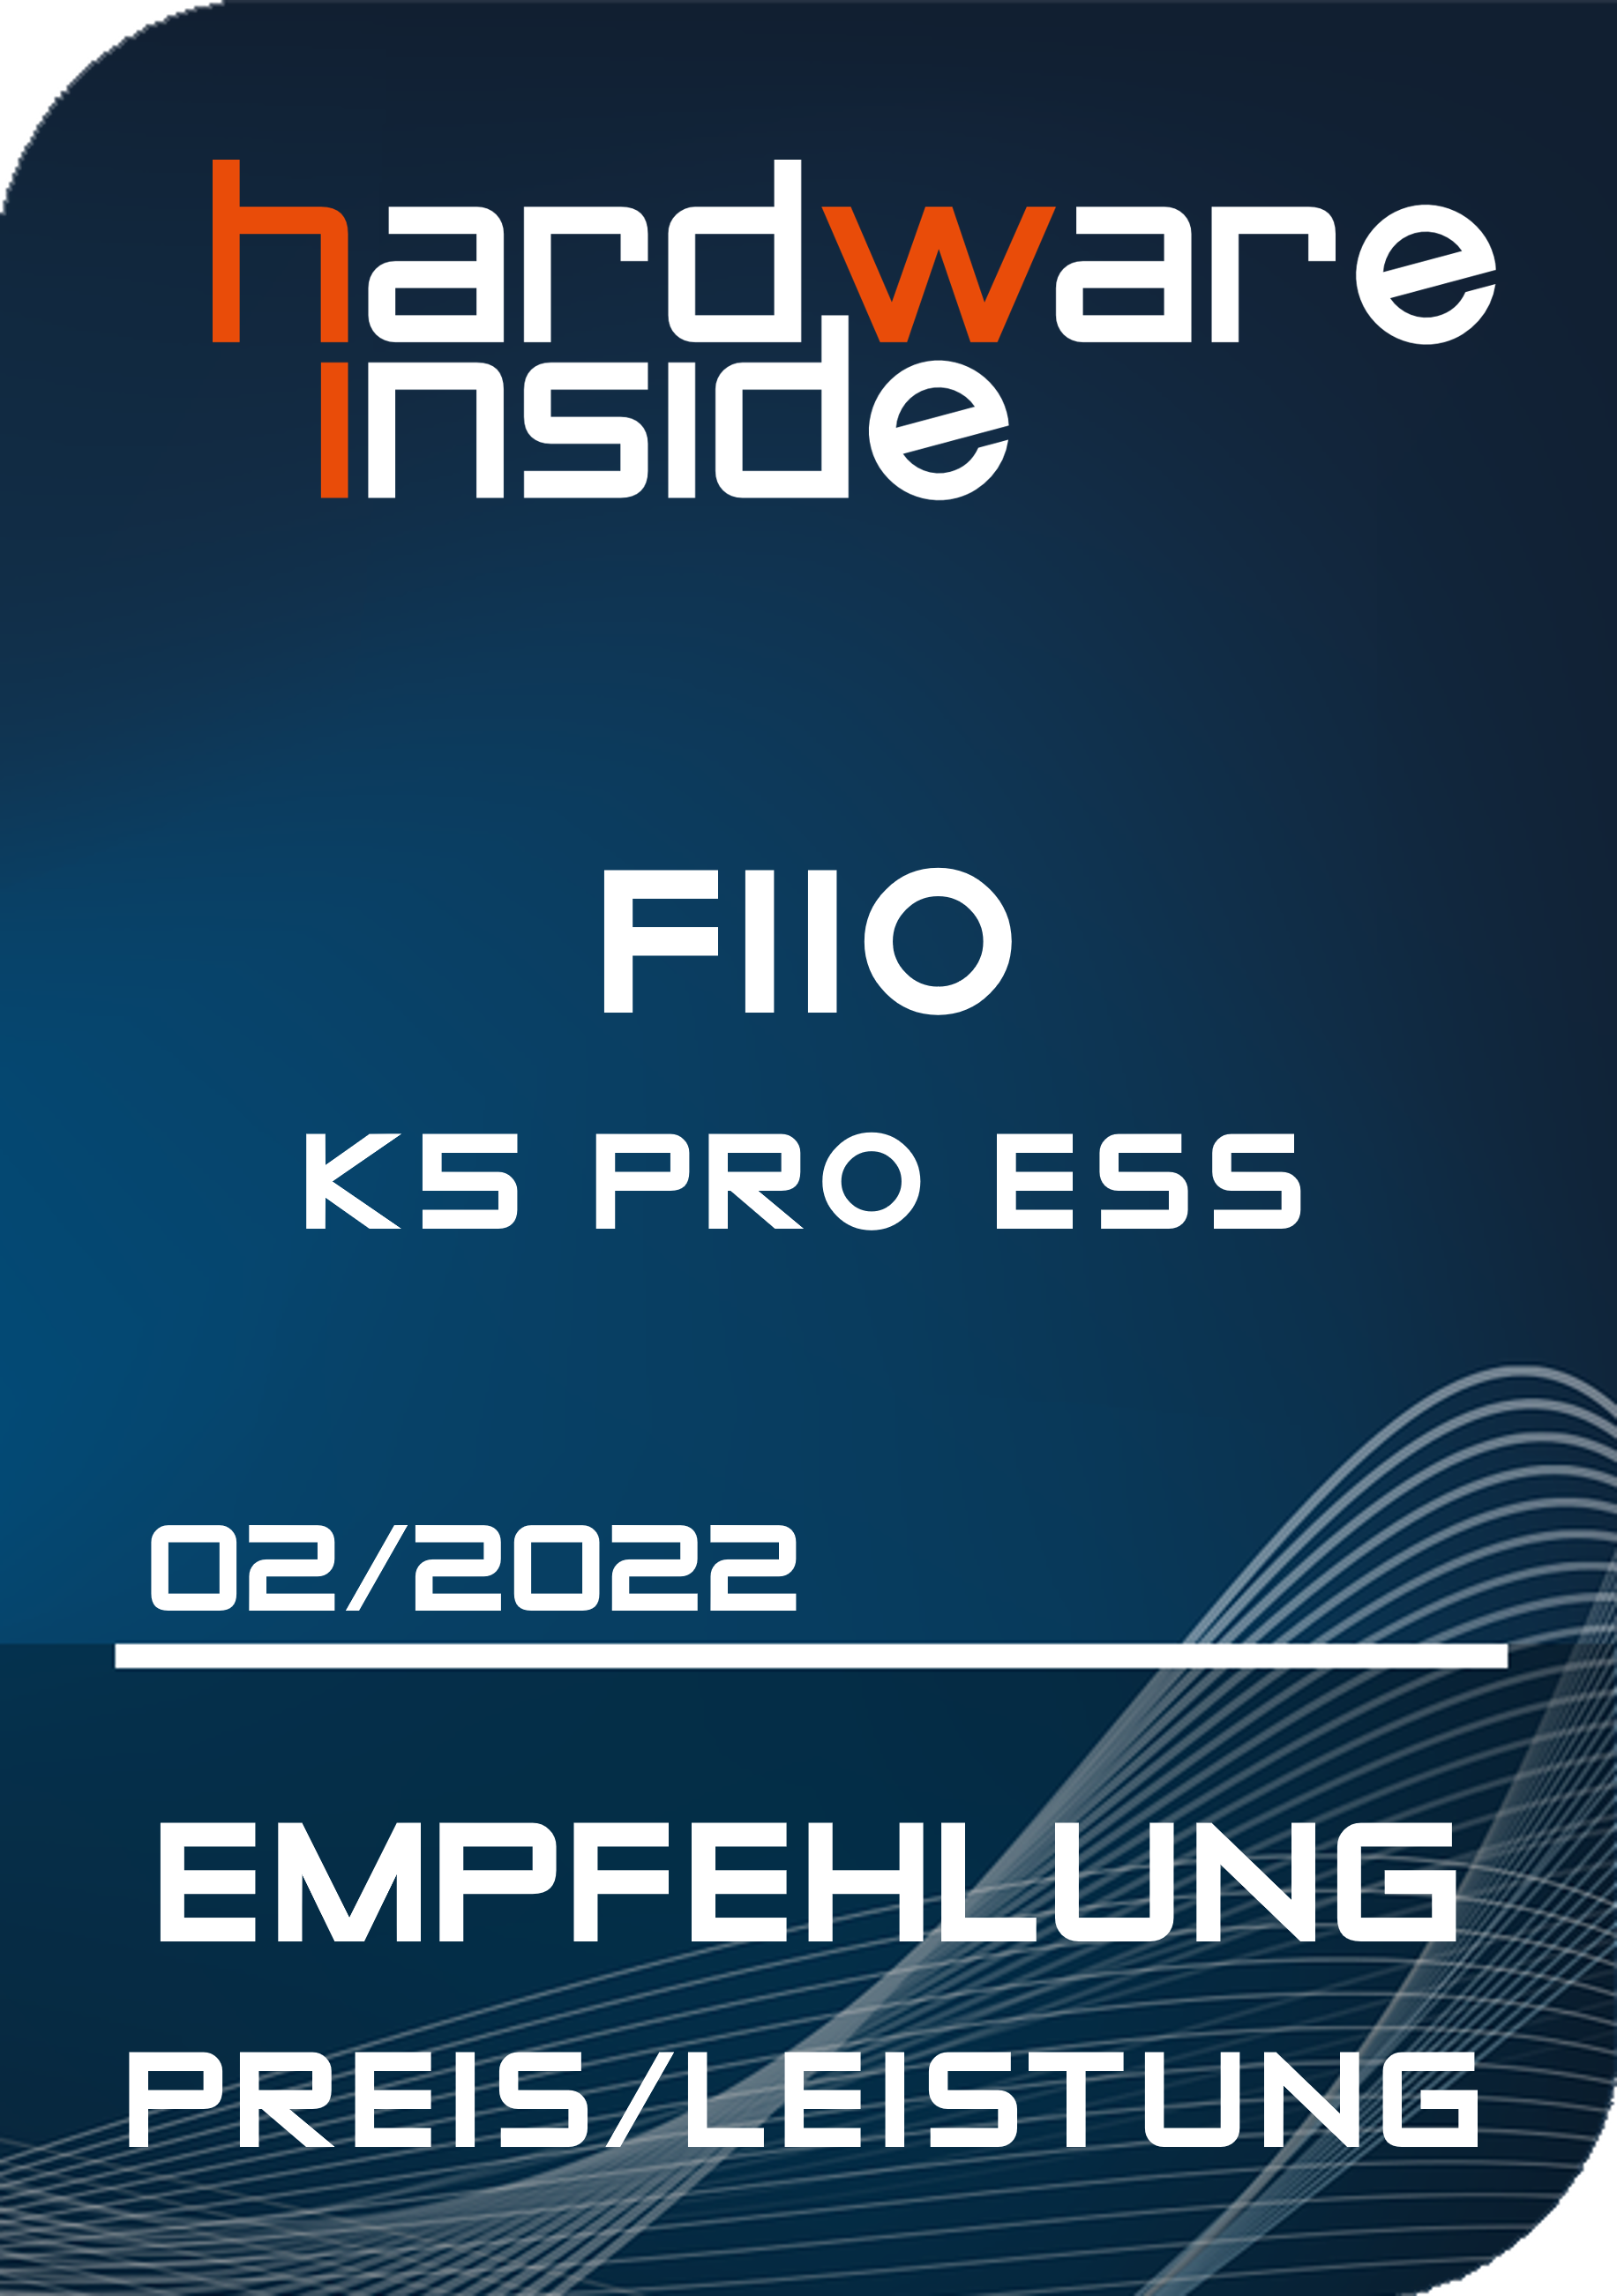 fiio-k5pro-ess-review-award-highres.png